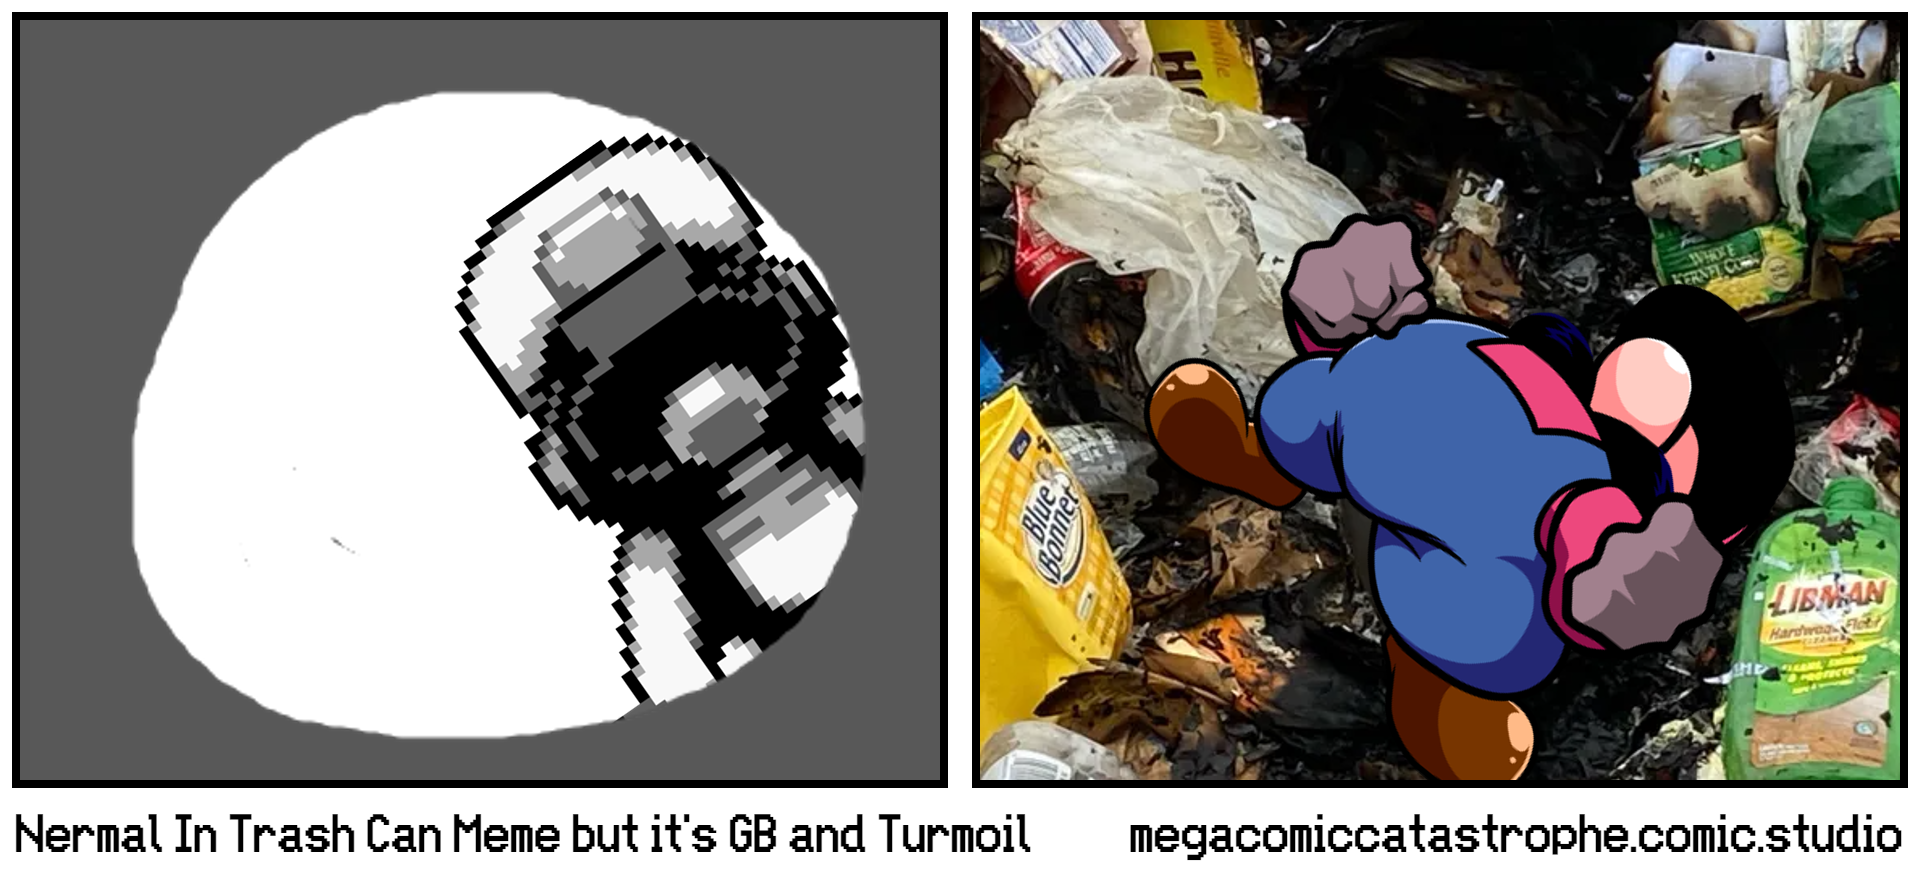 Nermal In Trash Can Meme but it's GB and Turmoil